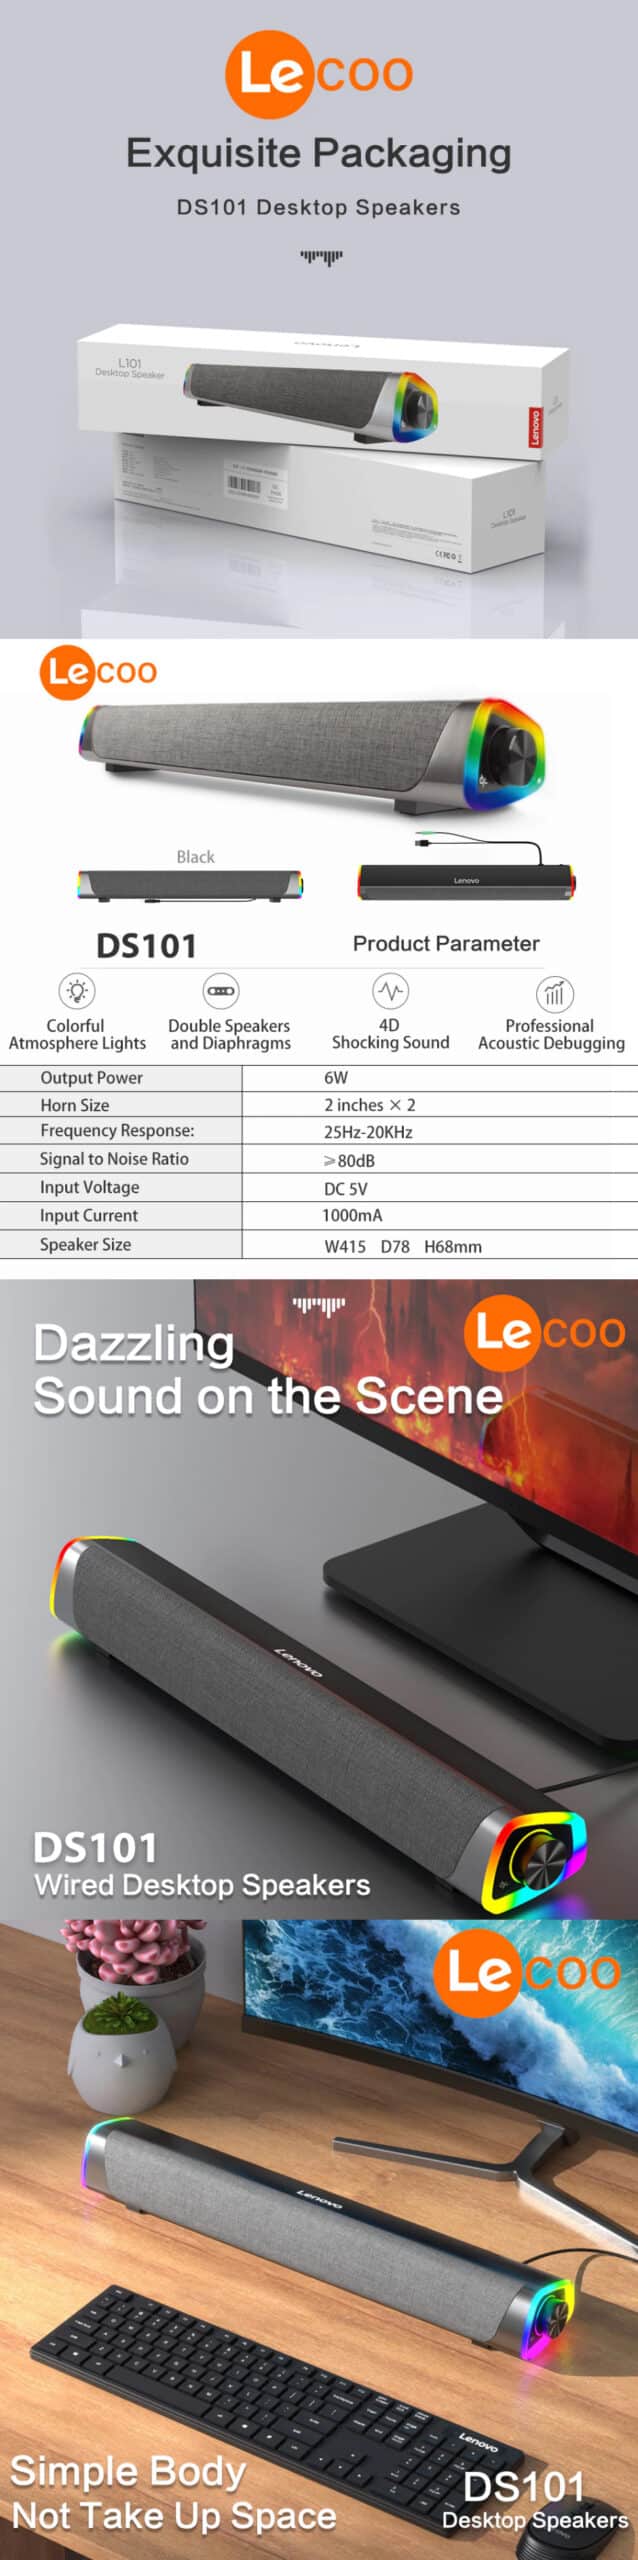 lenovo lecoo DS101 Desktop Soundbar 2 scaled